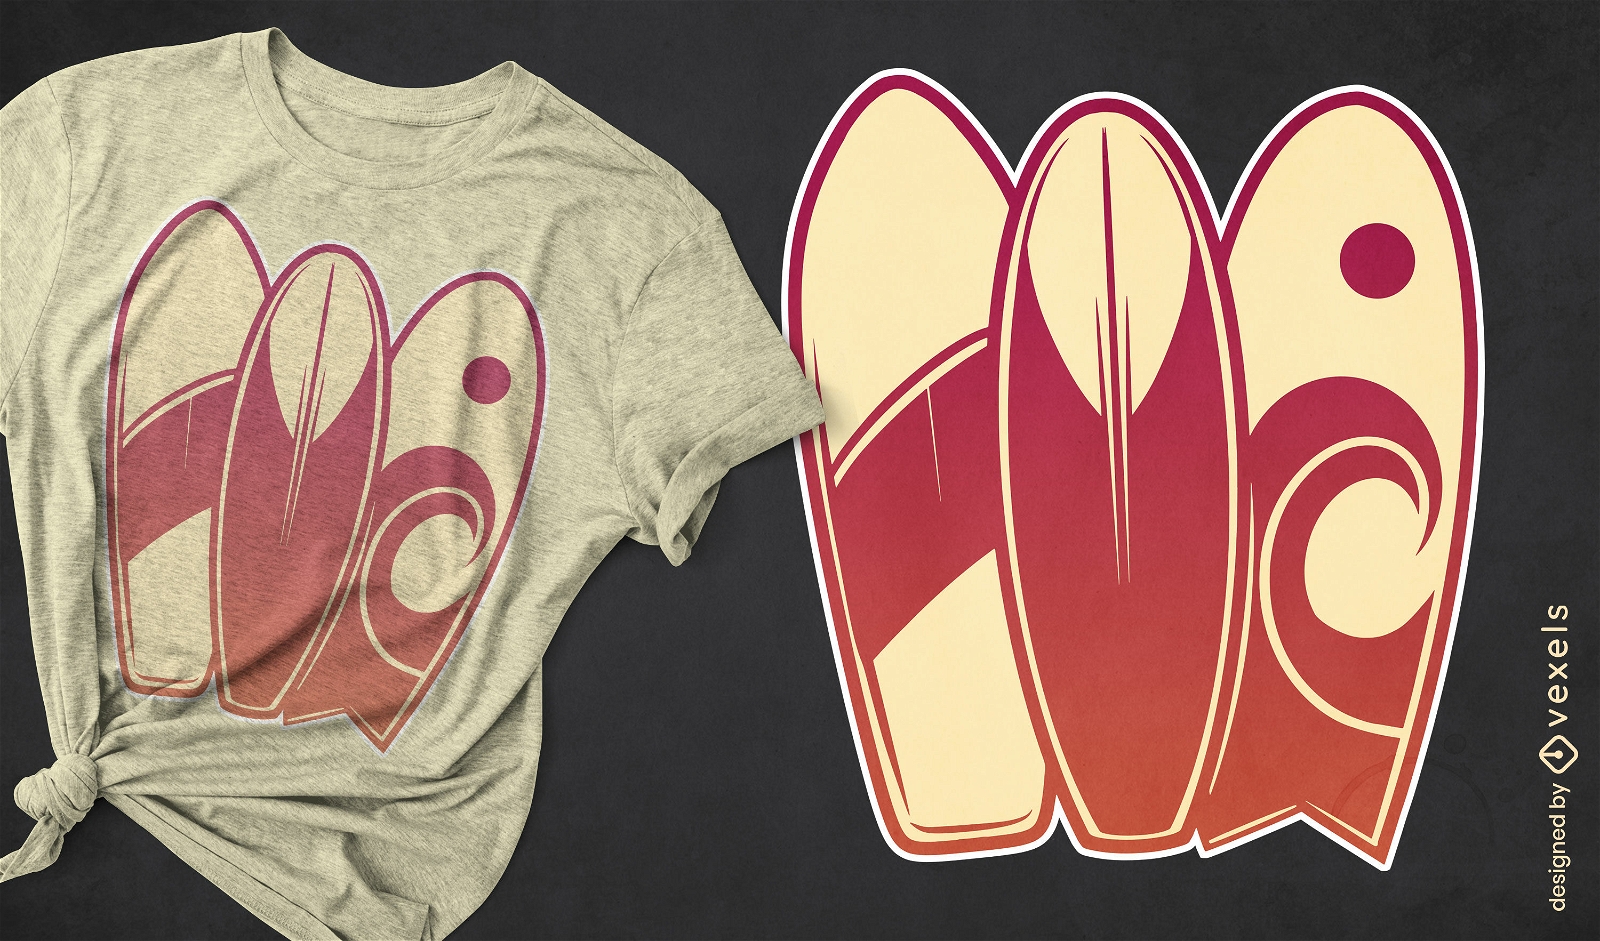 Surfing boards hobby t-shirt design